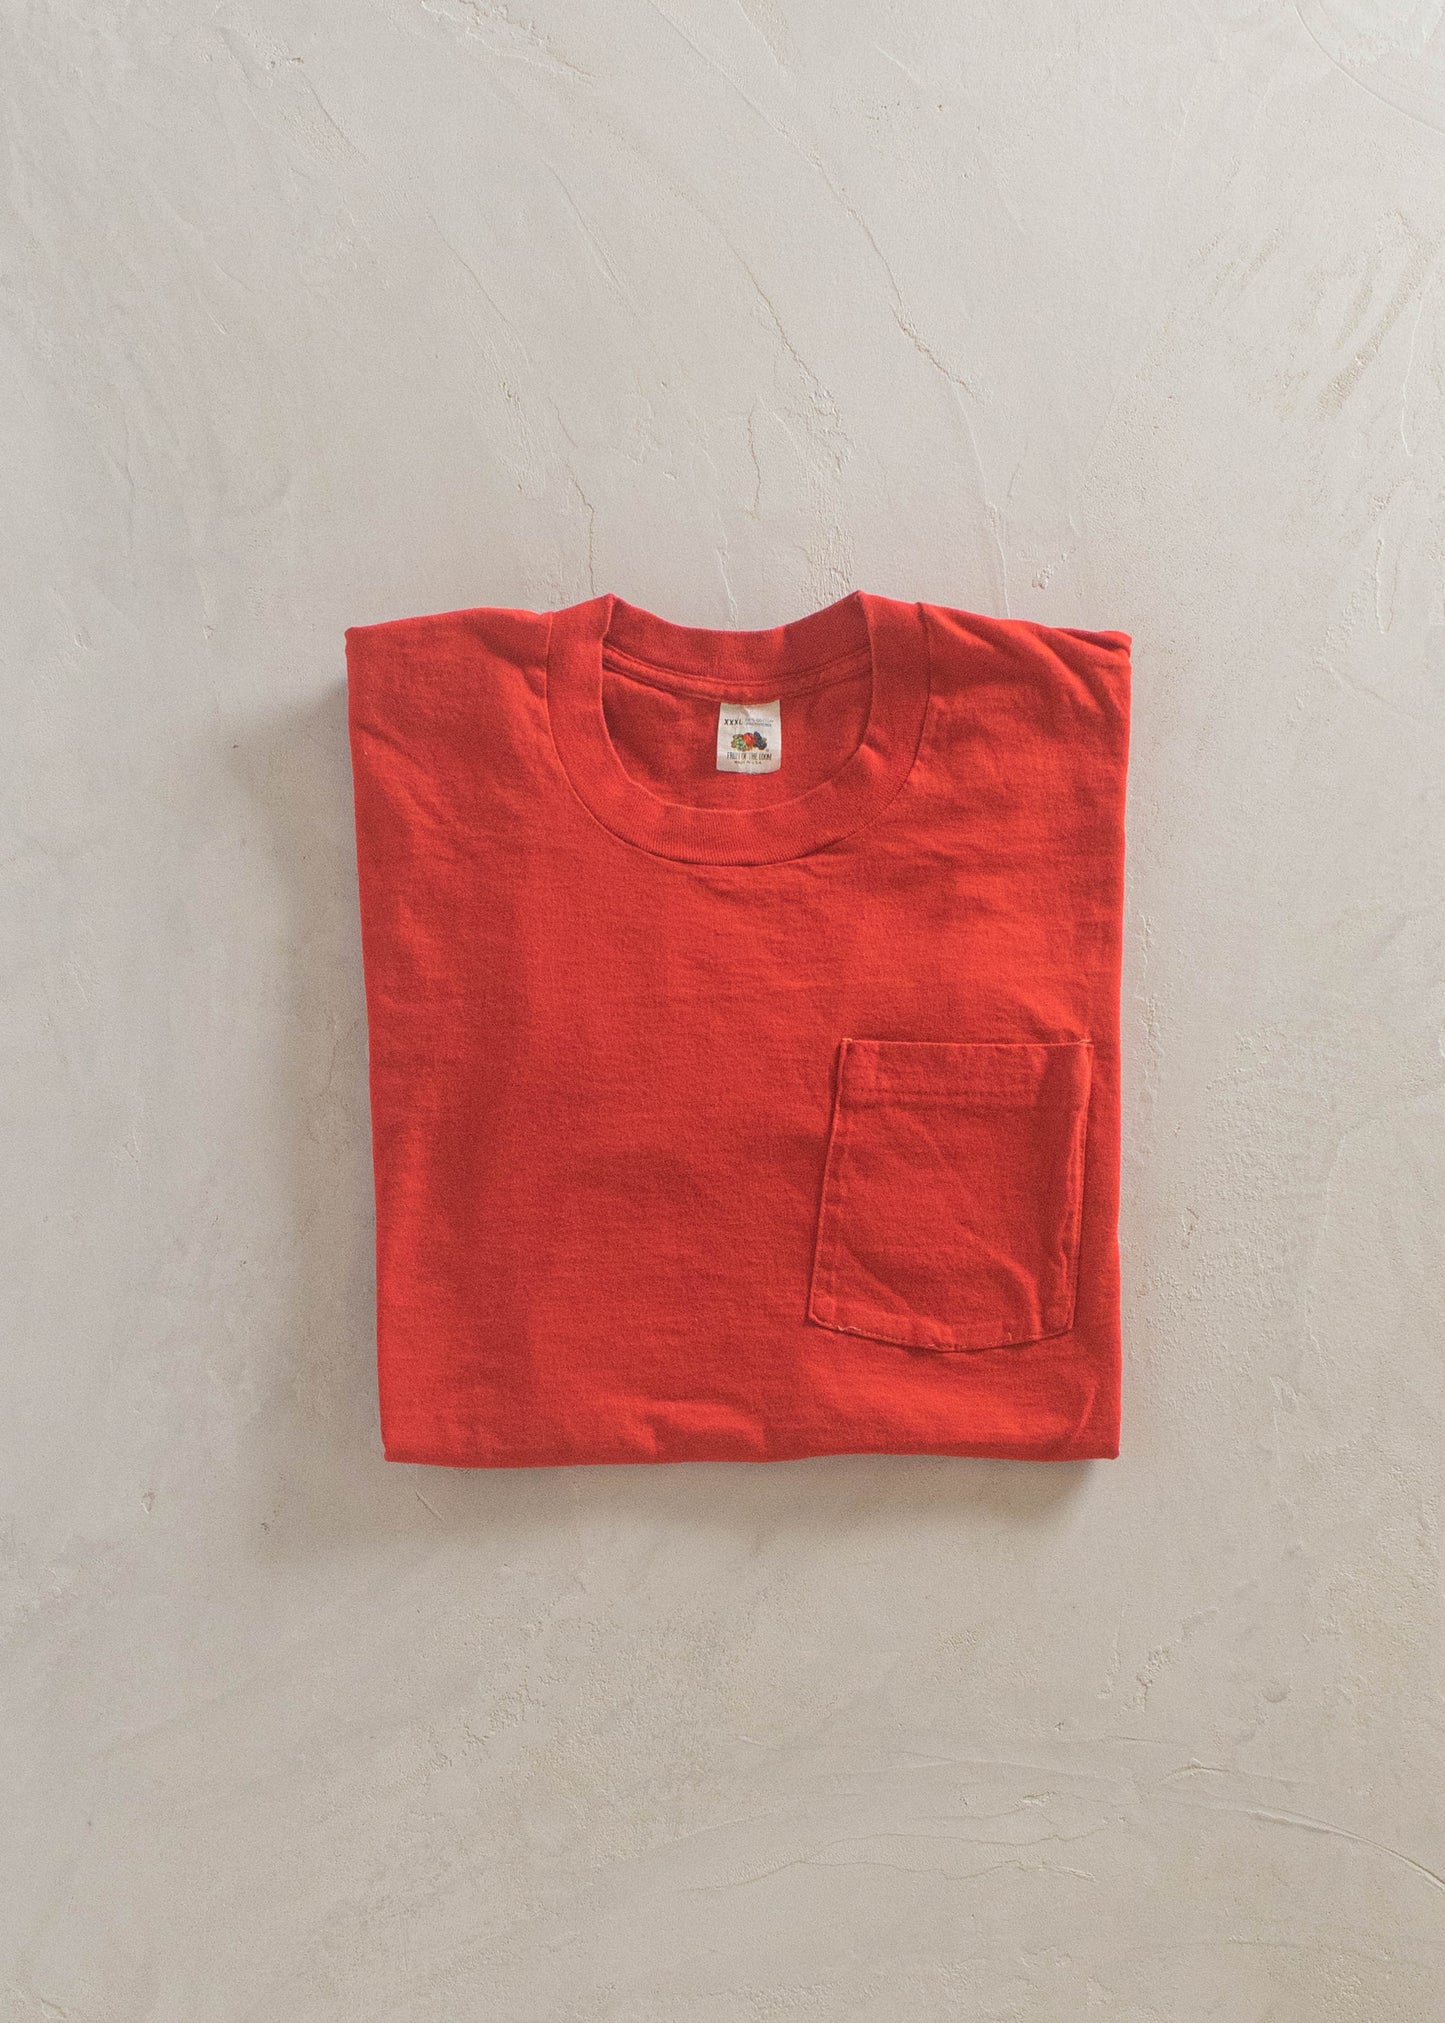 Vintage 1980s Fruit of the Loom Pocket T-Shirt Size XL/2XL